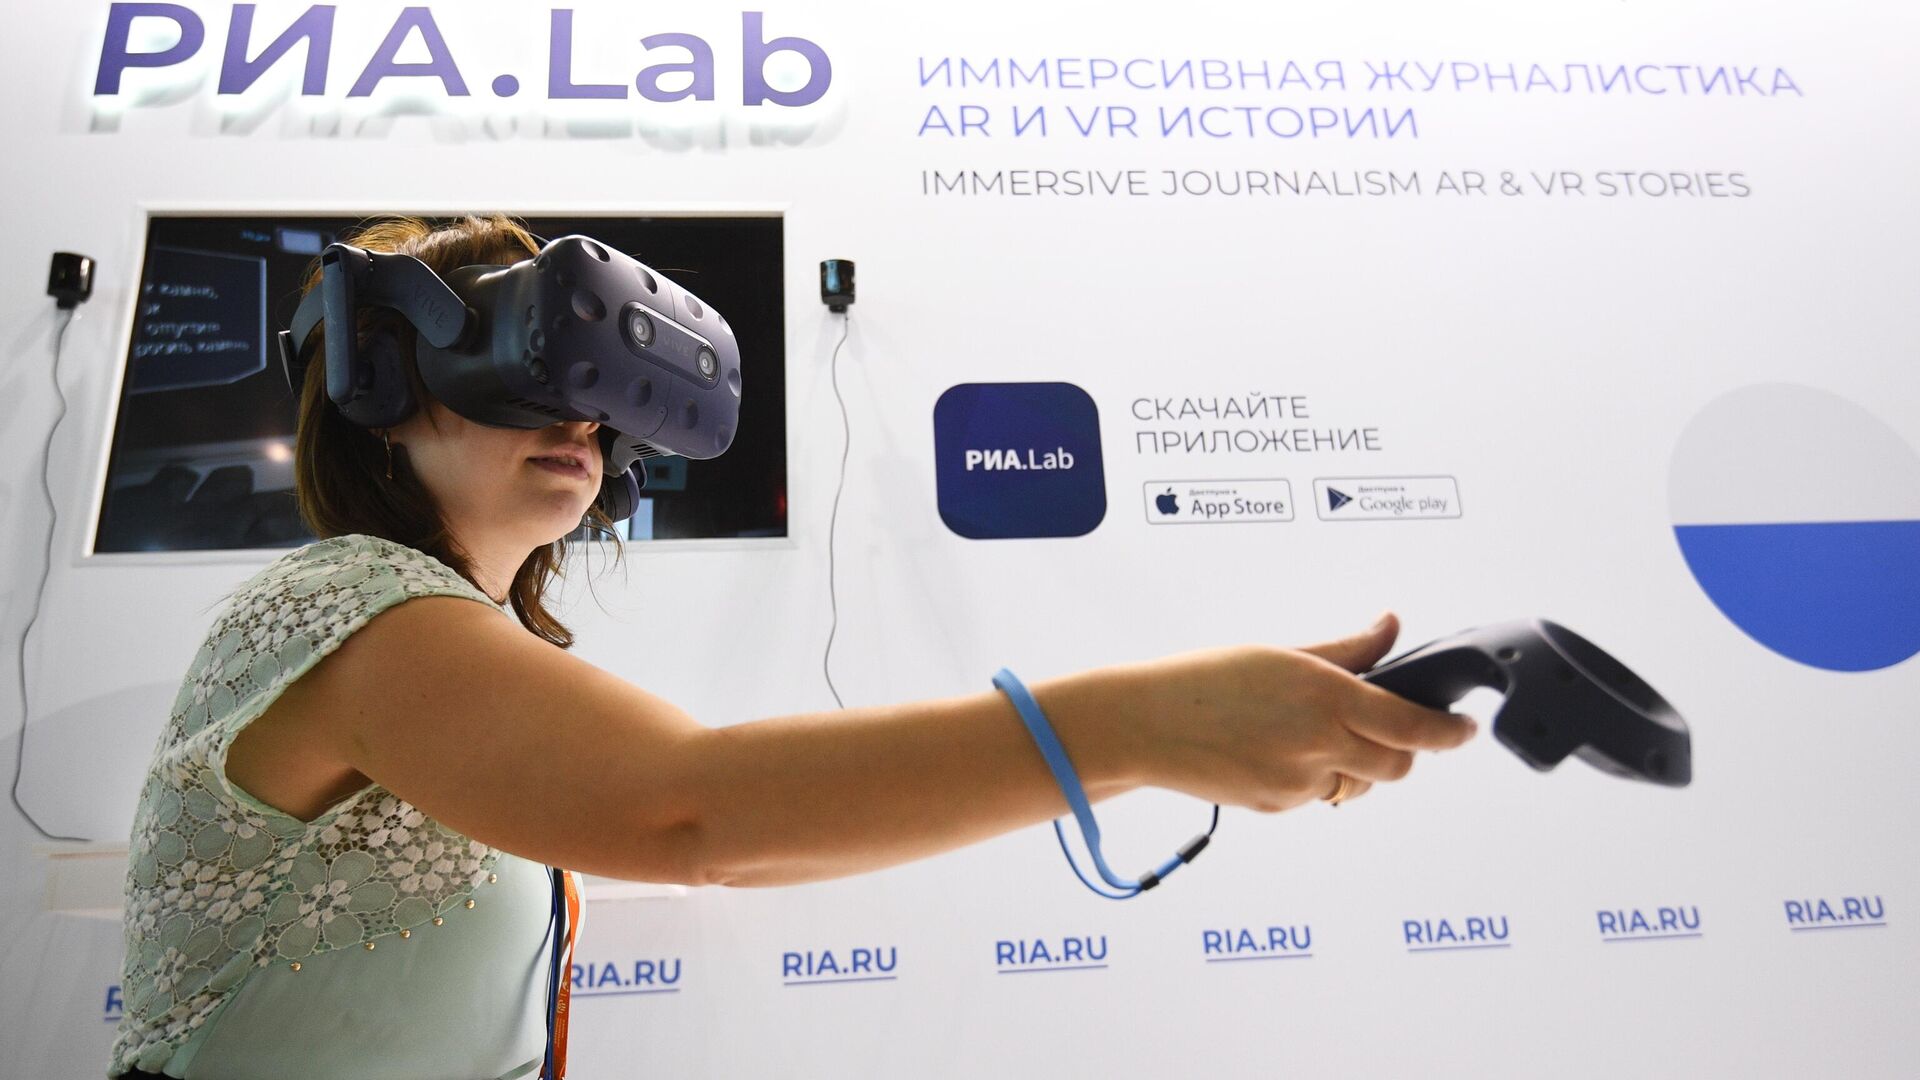 Девушка тестирует VR-очки в презентационной зоне РИА.Lab на стенде МИА Россия сегодня на ВДНХ в Москве - РИА Новости, 1920, 16.02.2021